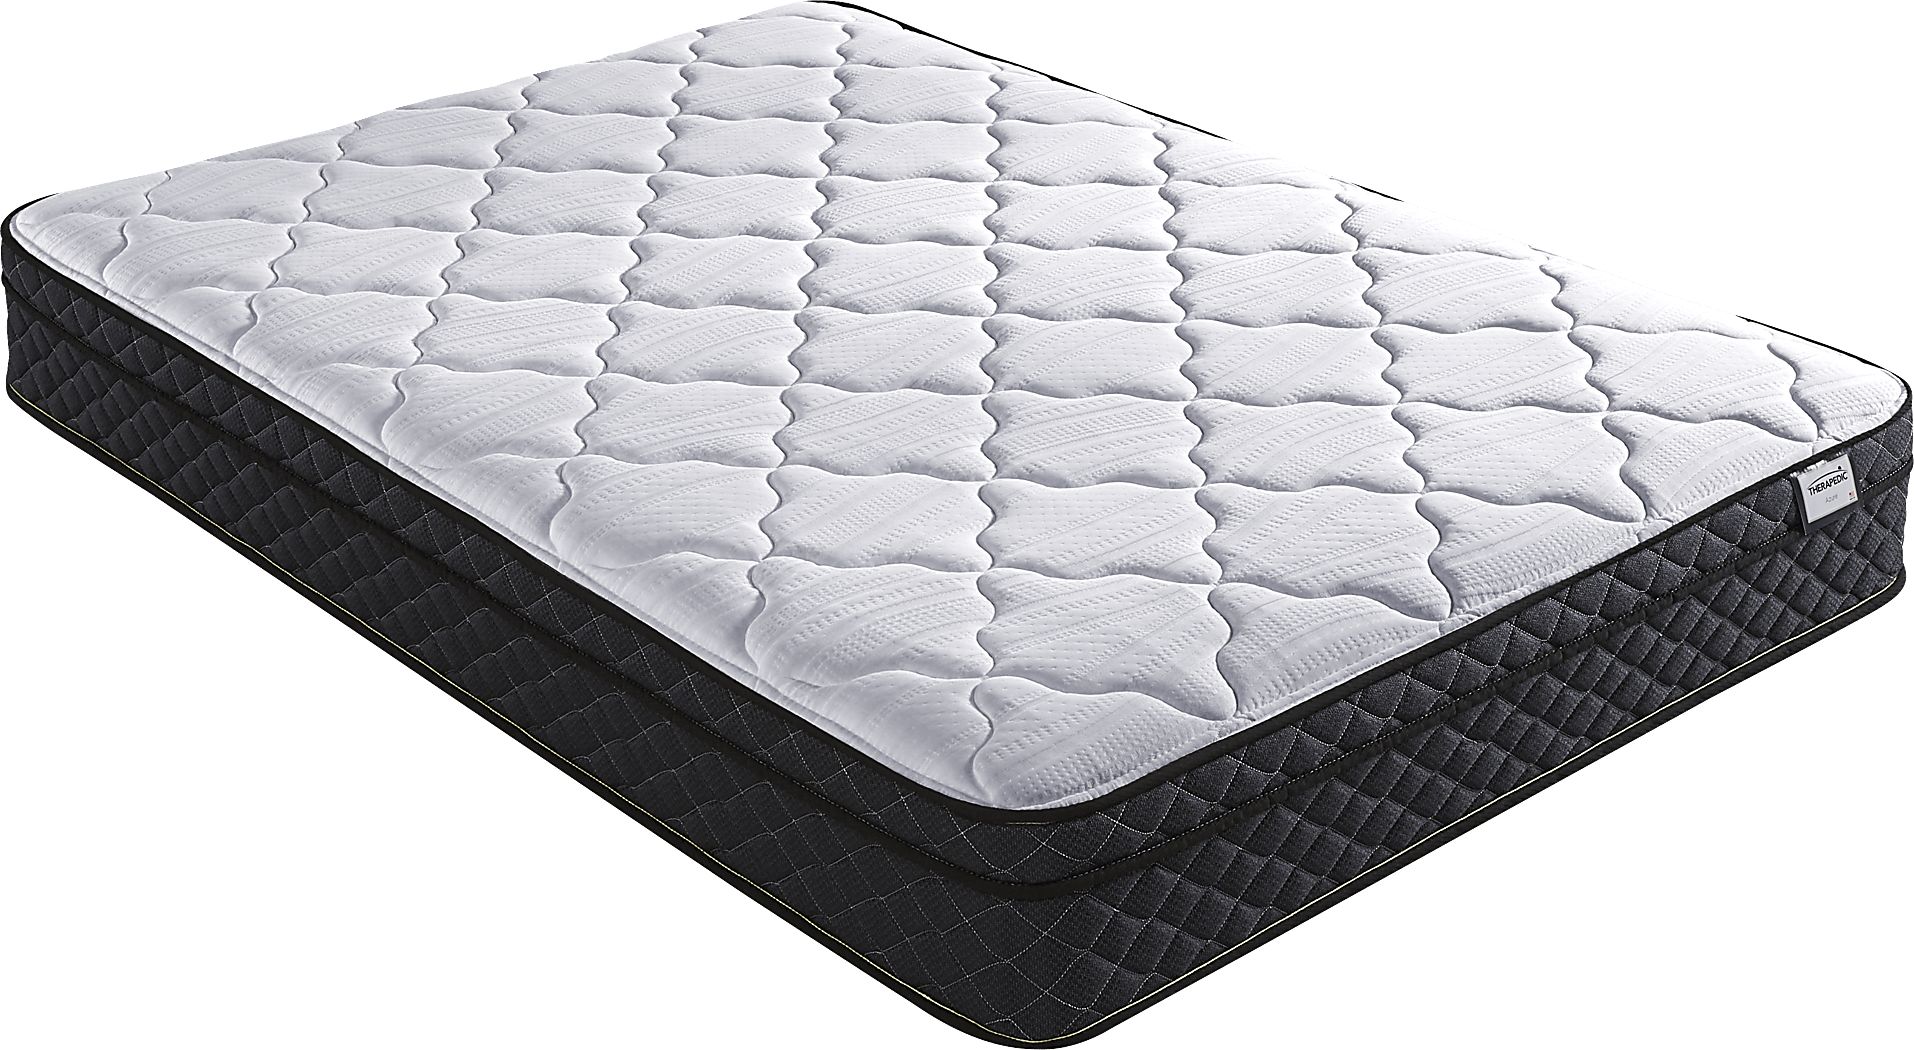 therapedic azure full mattress